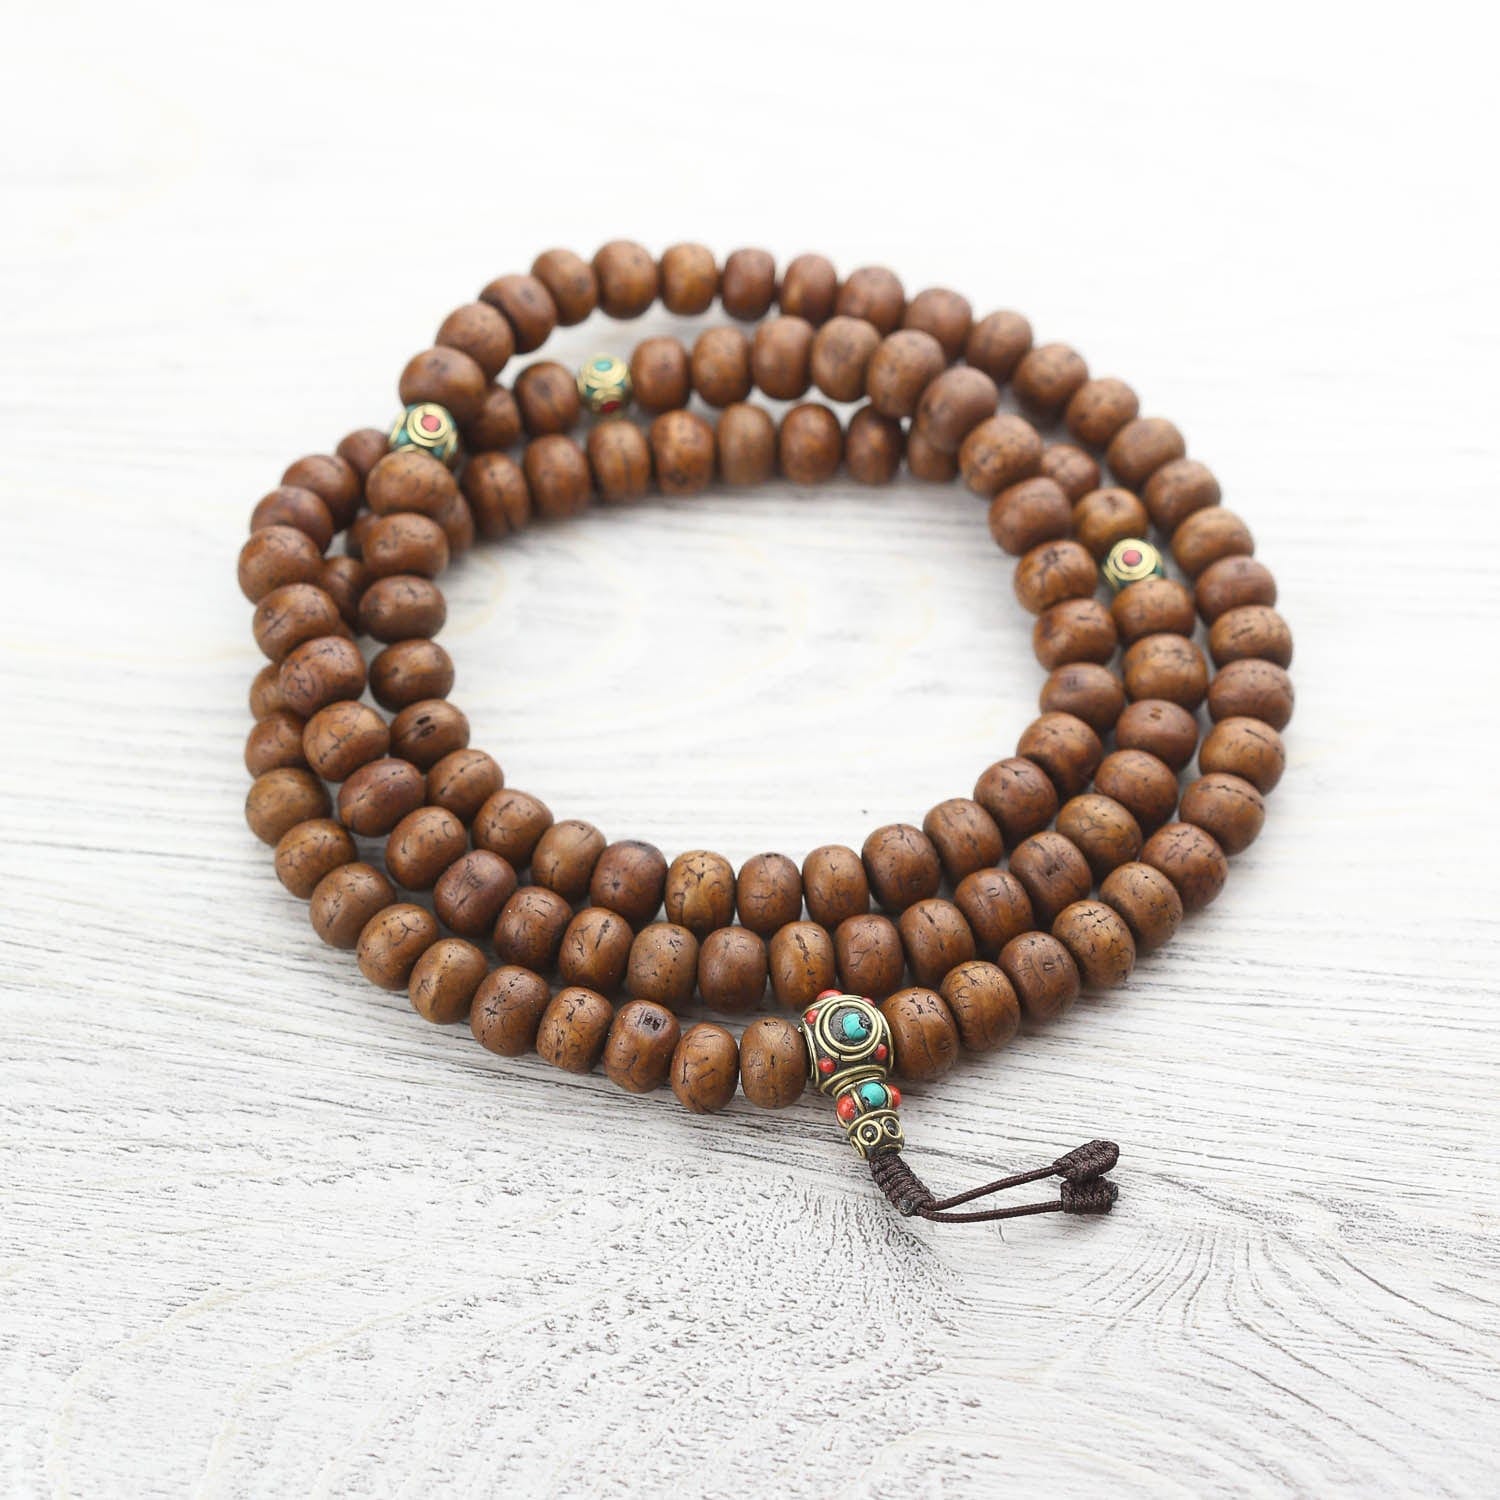 Mala Beads wood beads with Elastic Thread, Buddhist prayer, tranquility  jewelry. 108pcs – Splurg'd Studio